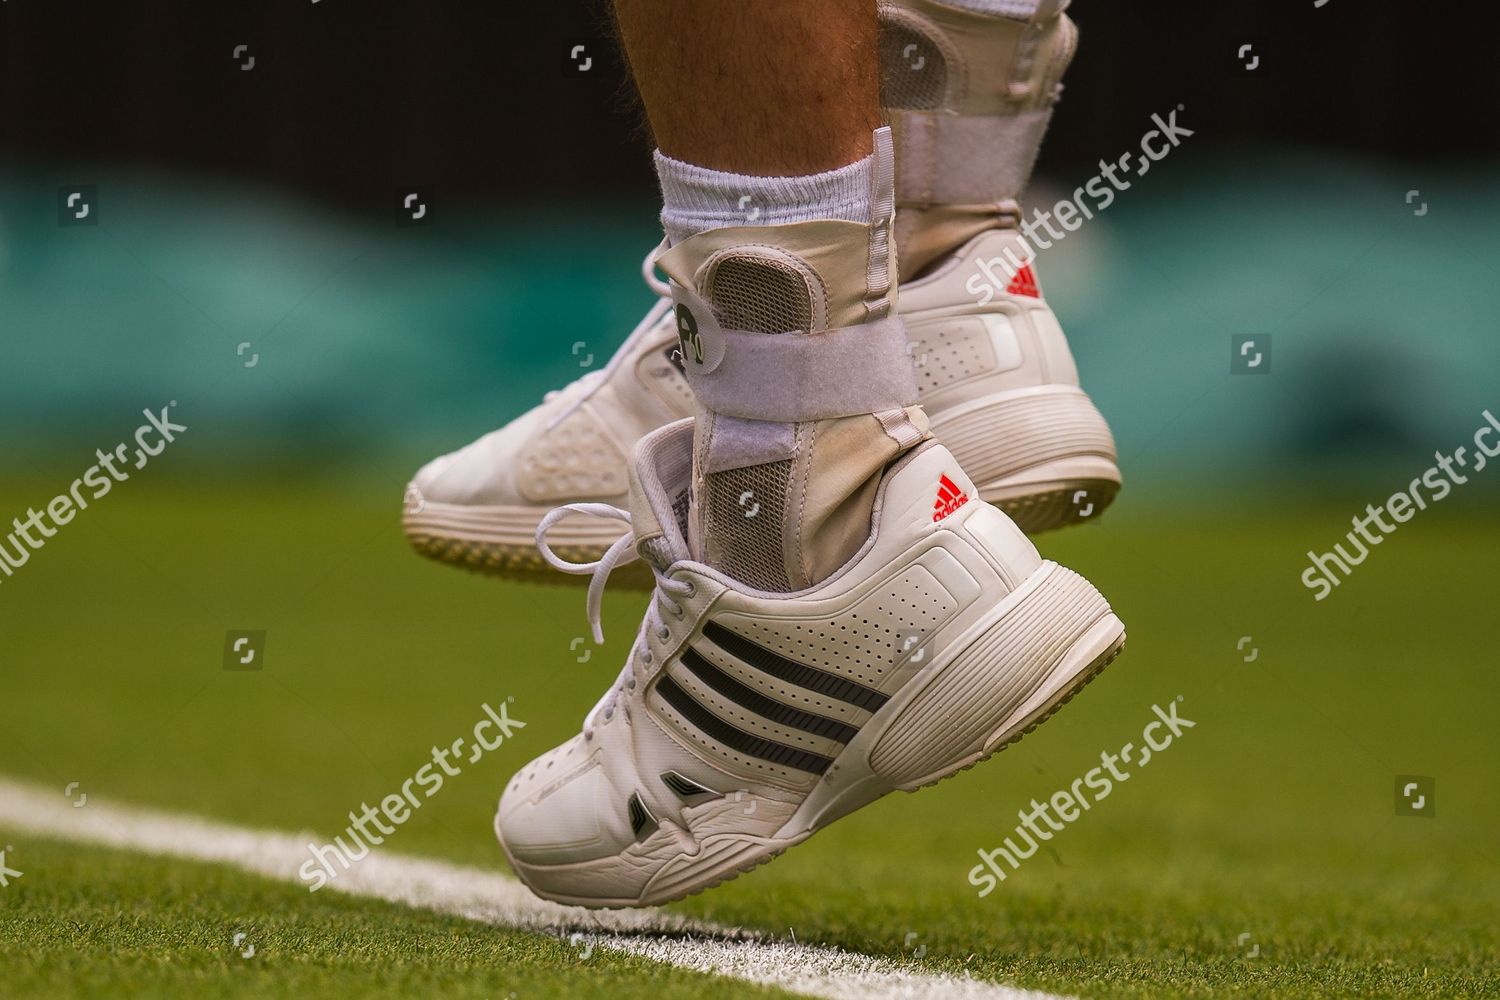 Rizo bostezando duda Adidas Tennis Shoes Andy Murray Gbr - Foto de stock de contenido editorial:  imagen de stock | Shutterstock